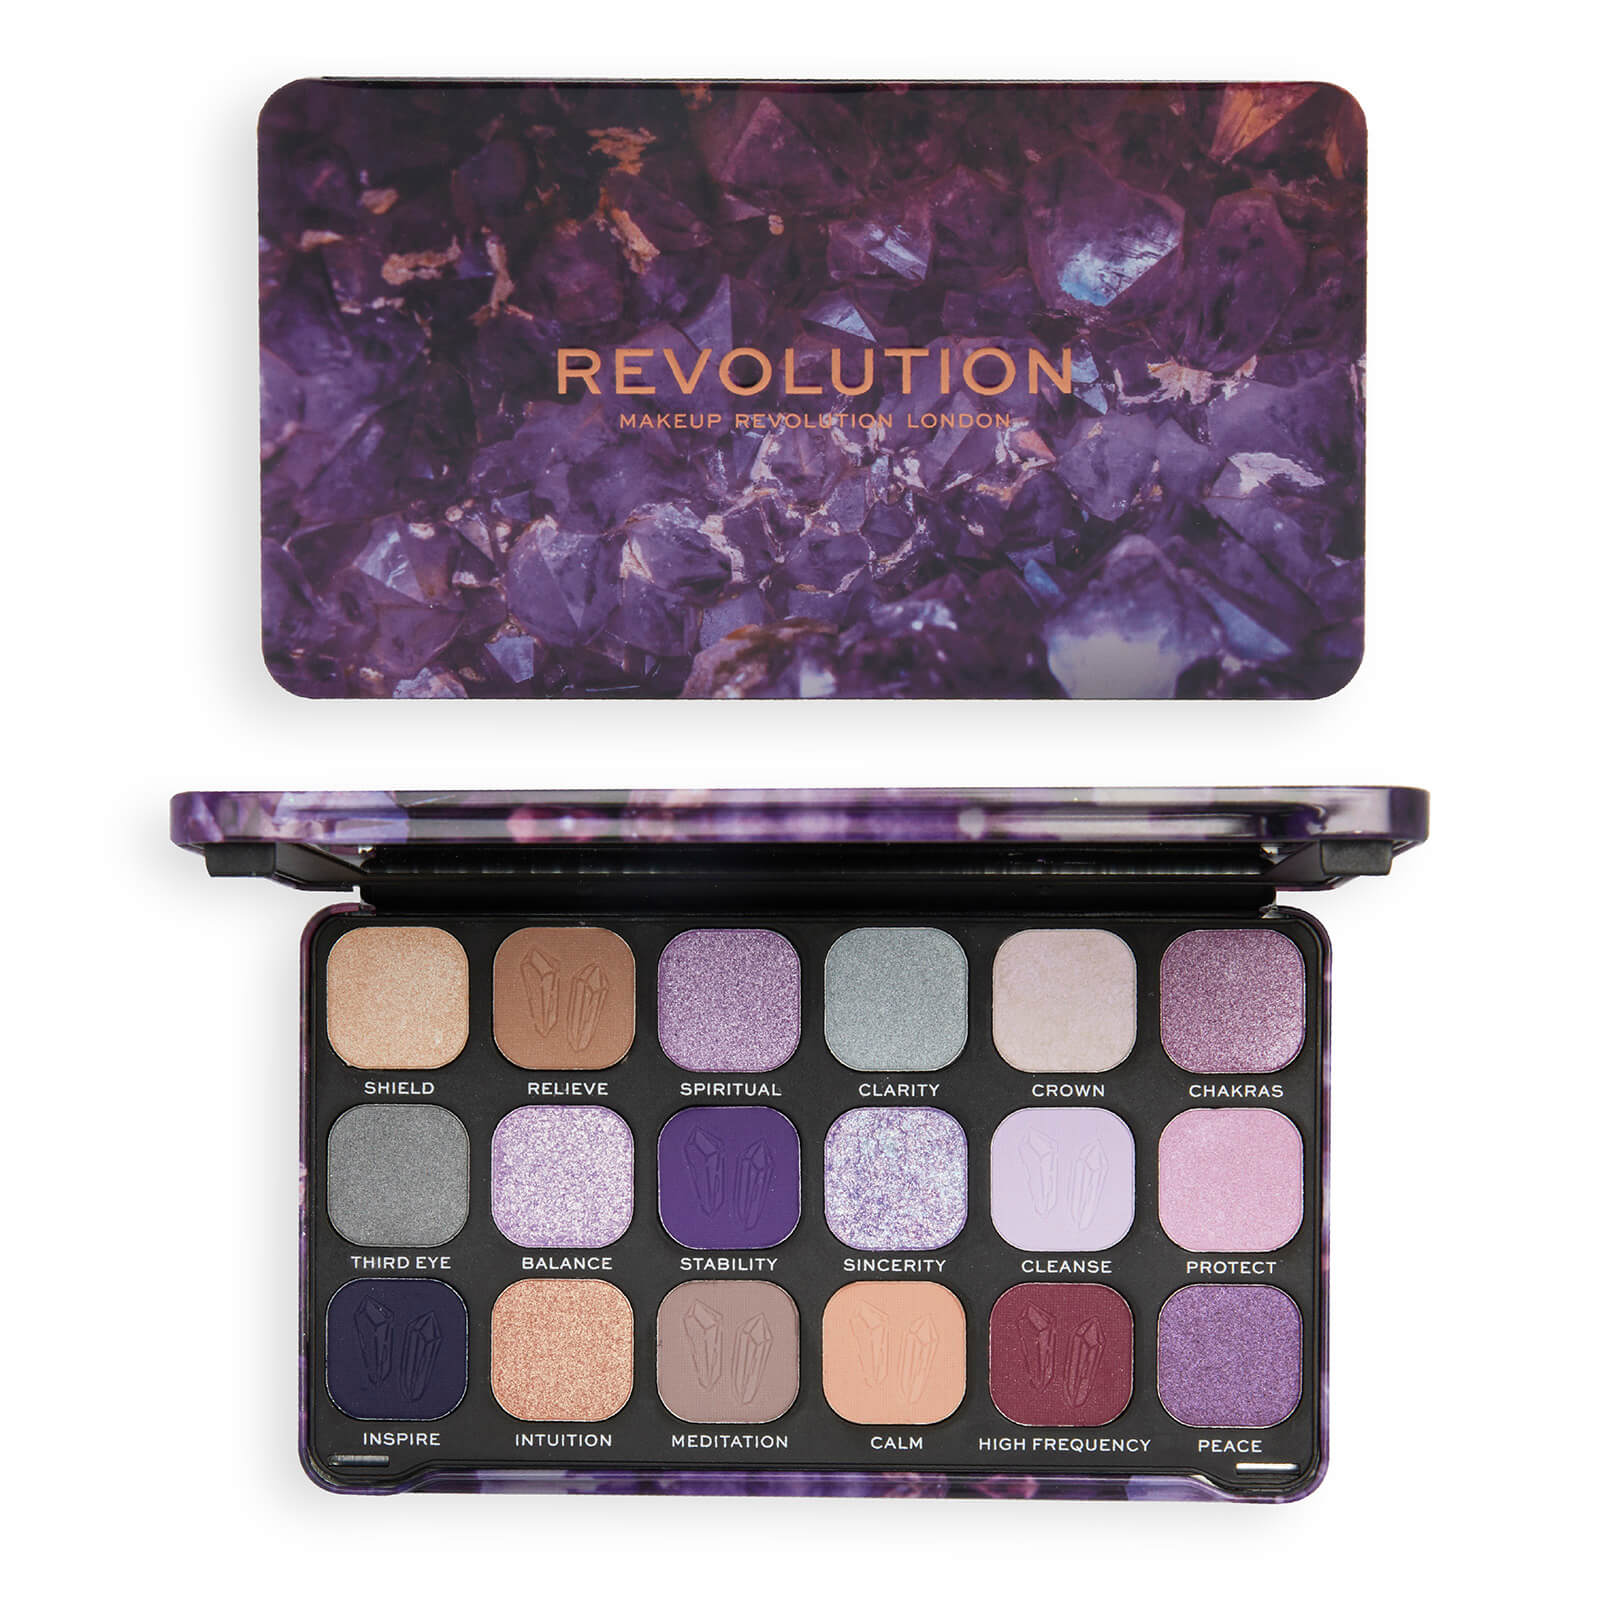 Makeup Revolution Revolution Crystal Aura Forever Flawless Shadow Palette (various Shades) - Amethyst